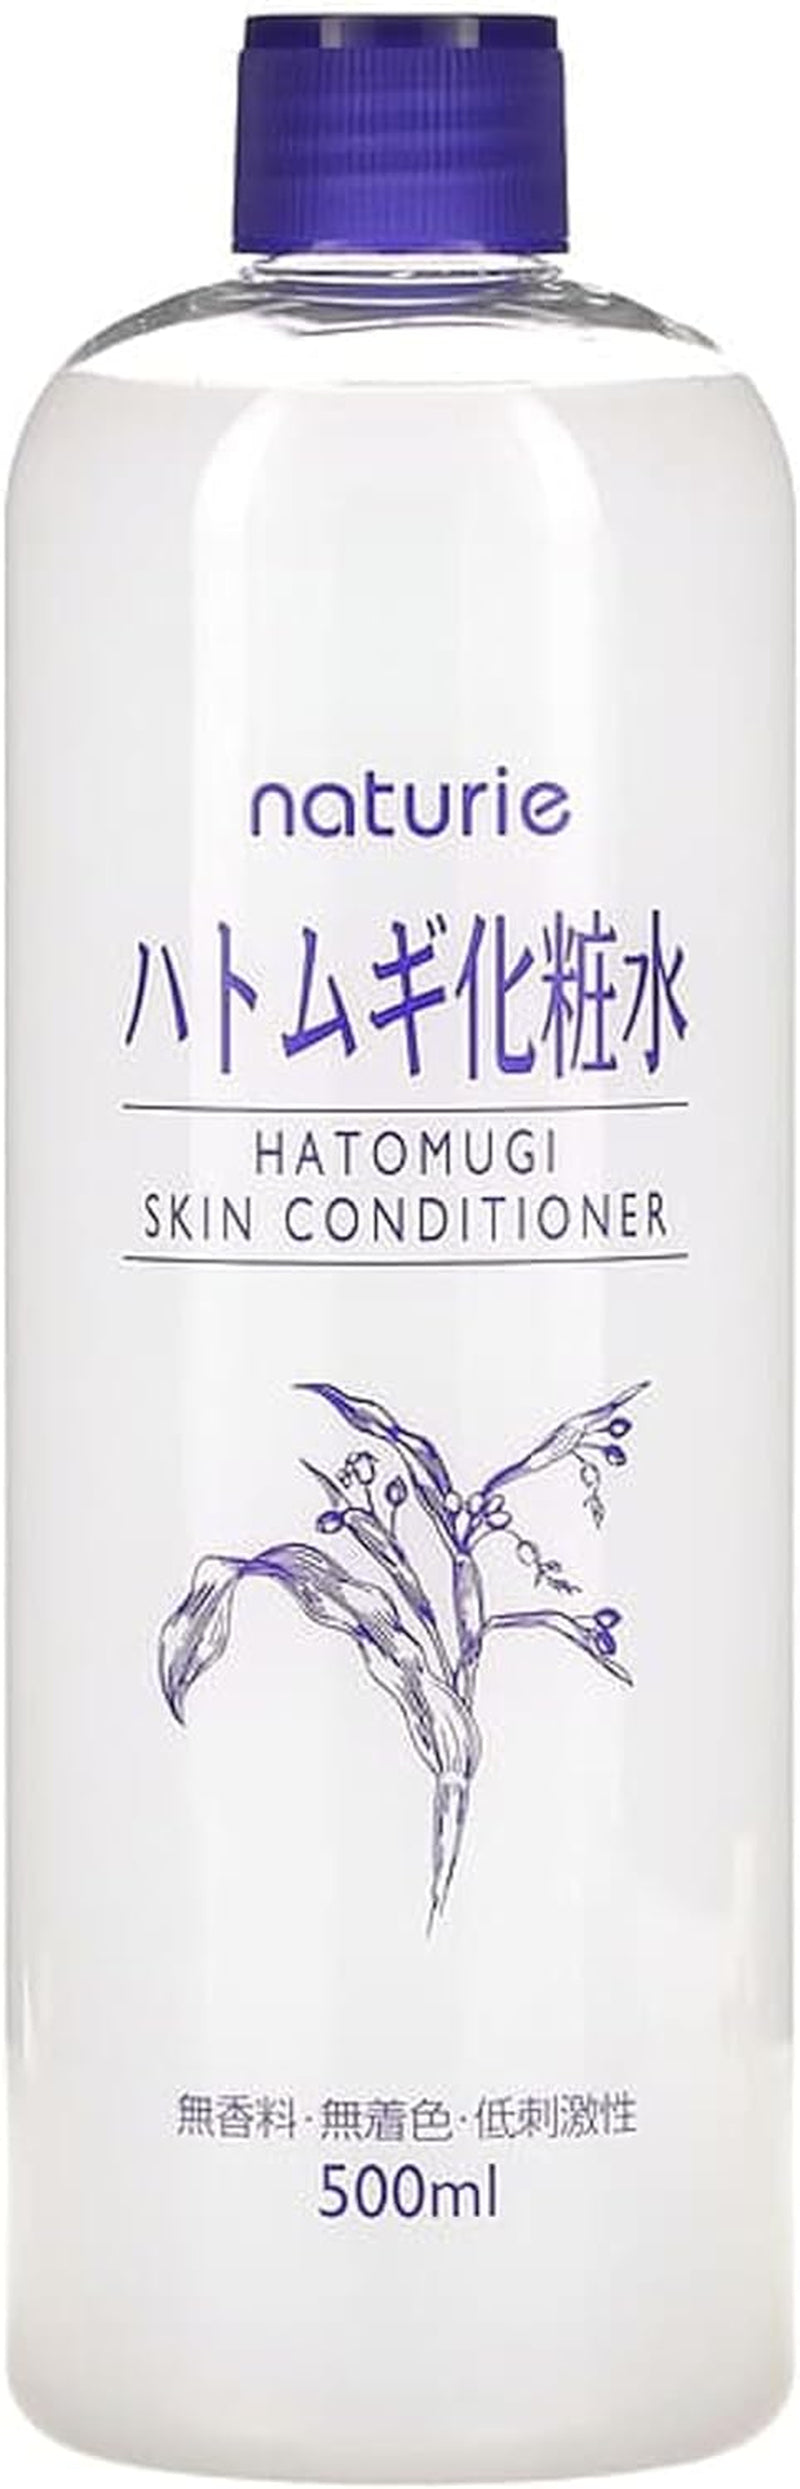 Imju Naturie Hatomugi Skin Conditioner Job'S Tears Lotion 500Ml